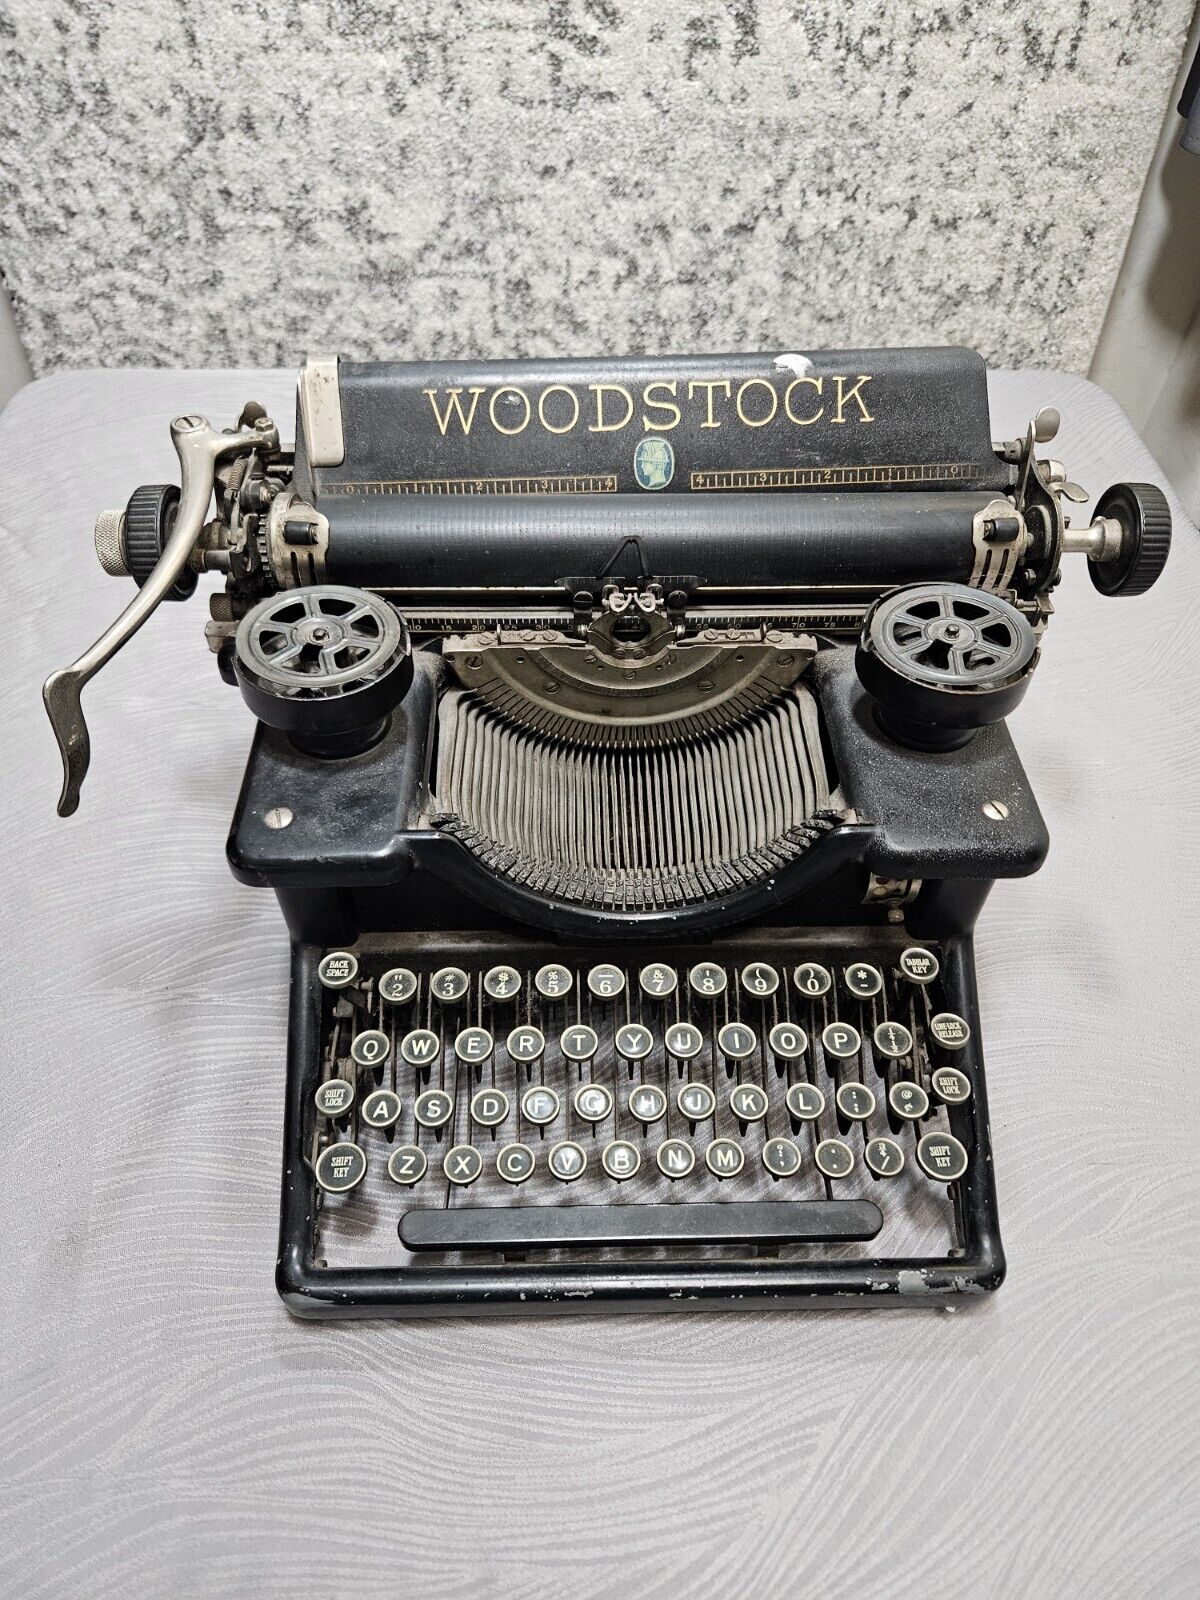 Vintage Woodstock Manual Typewriter Cast Iron, For Decor